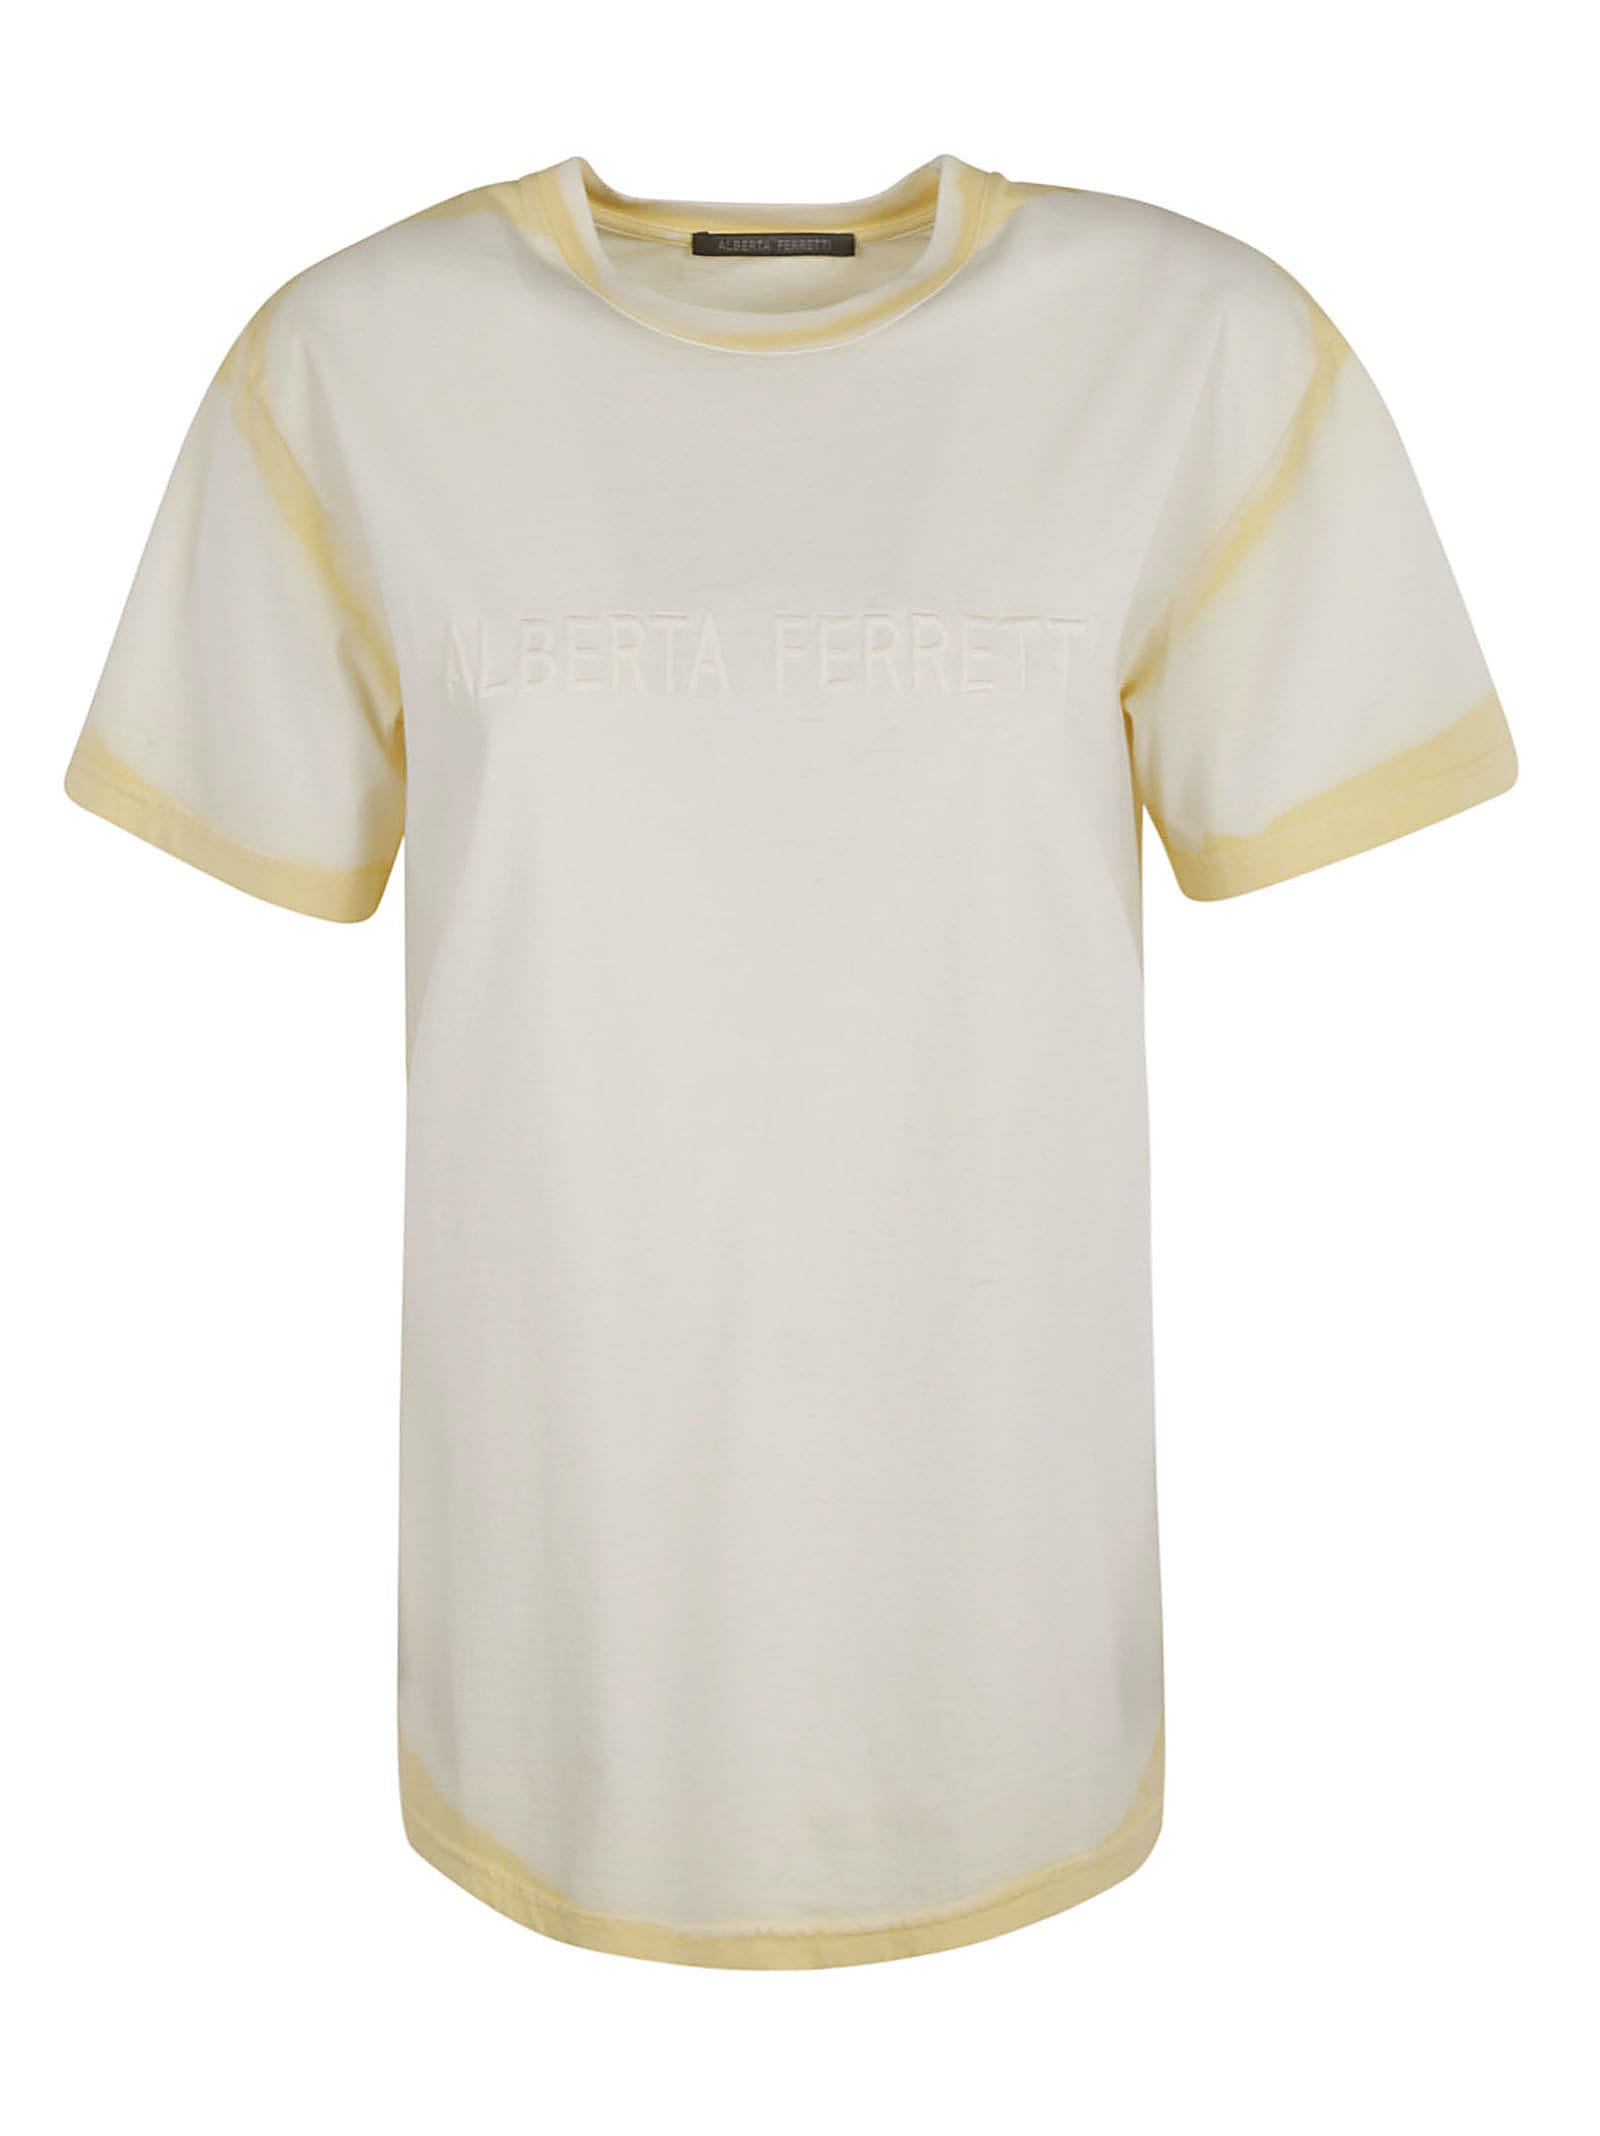 Alberta Ferretti Embroidered Logo T-shirt In Beige/yellow